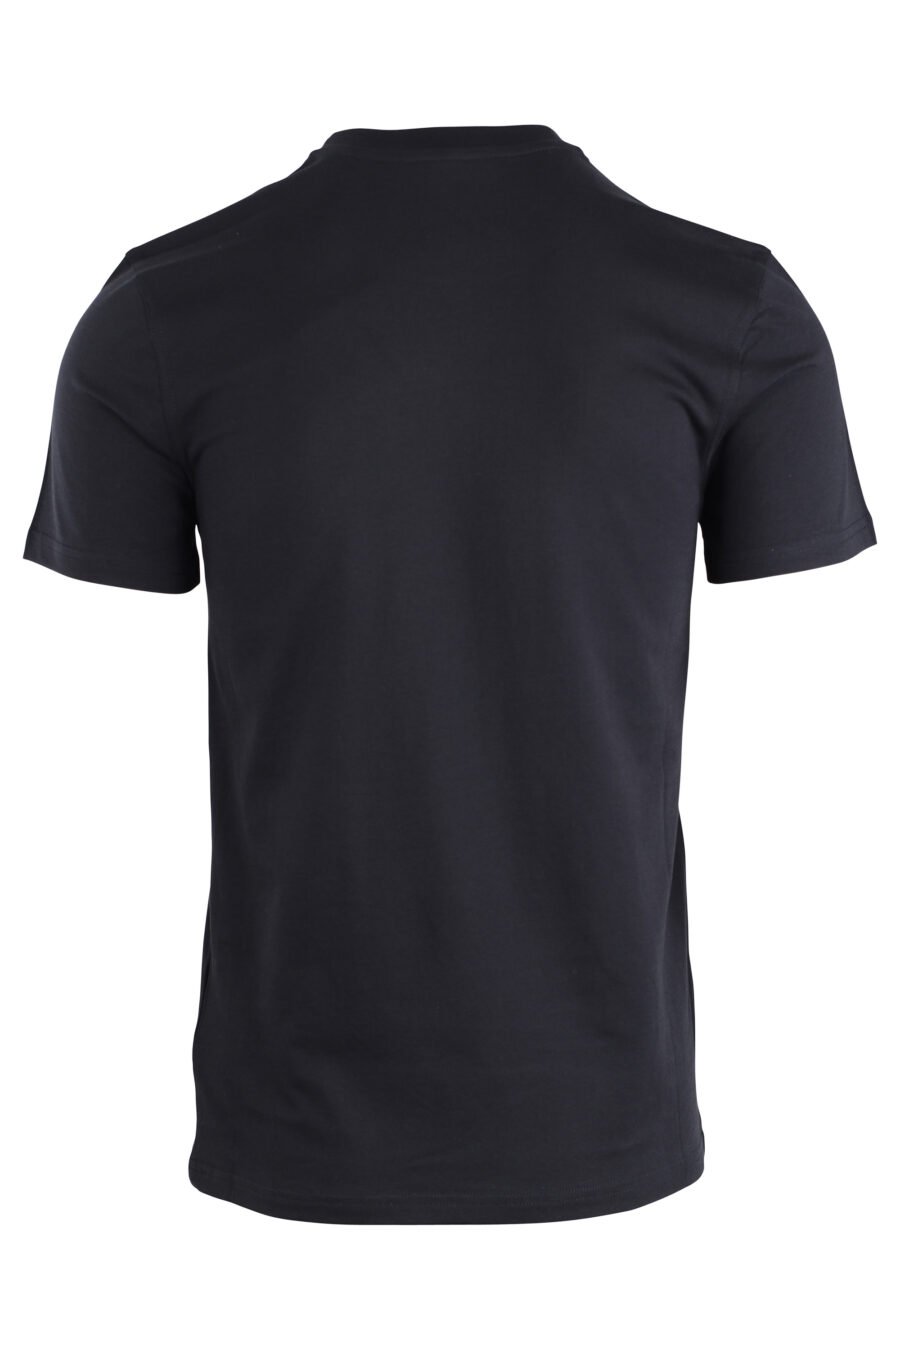 Black T-shirt with monochrome bear minilogue - IMG 1671